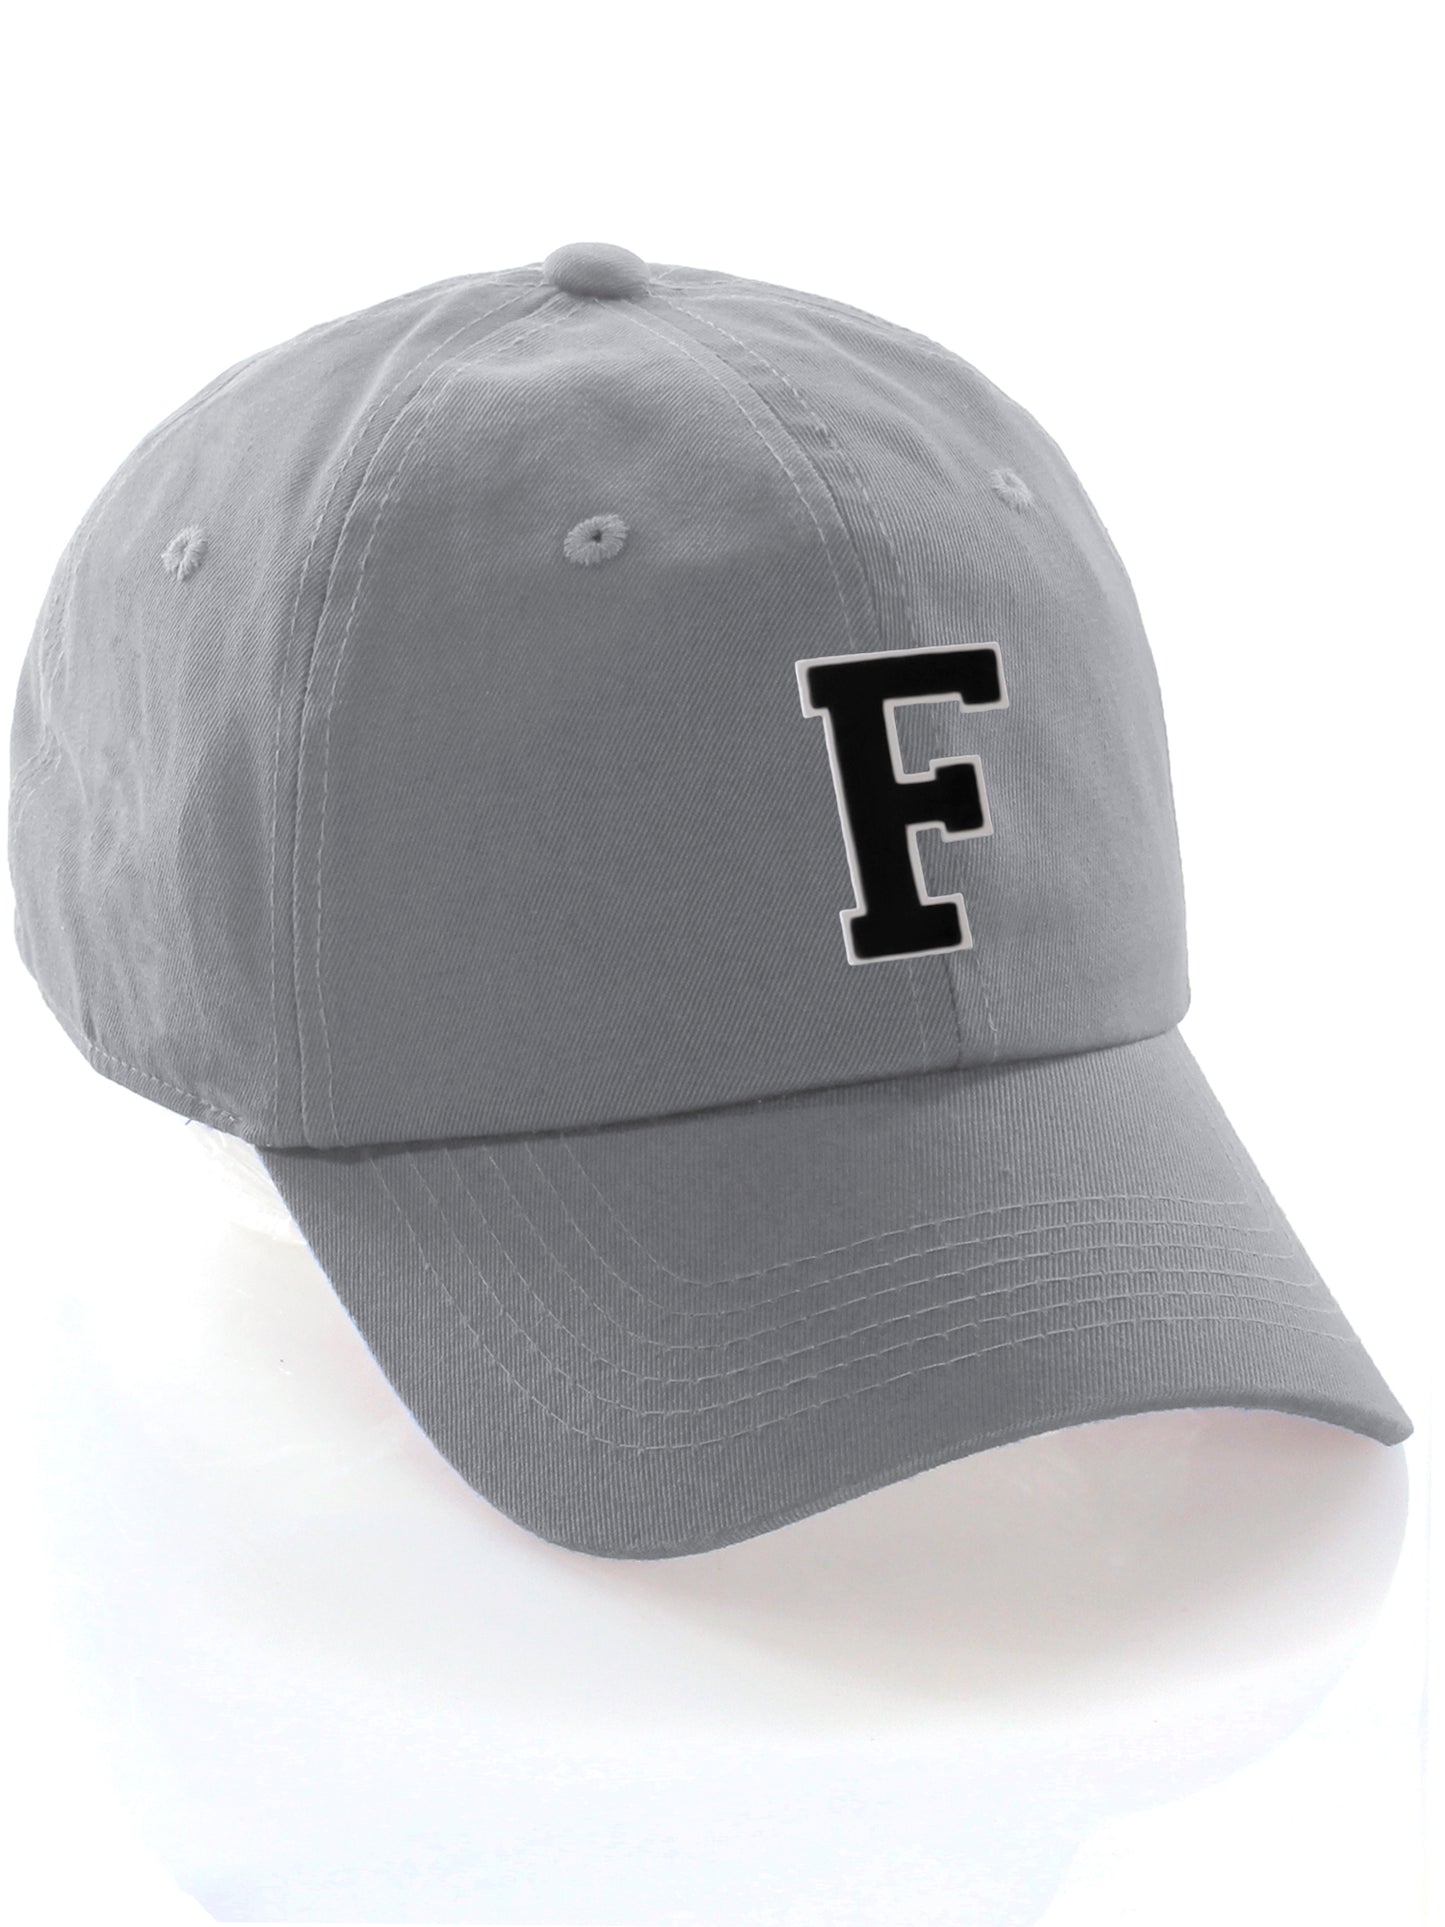 Custom Hat A to Z Initial Letters Classic Baseball Cap, Light Grey White Black